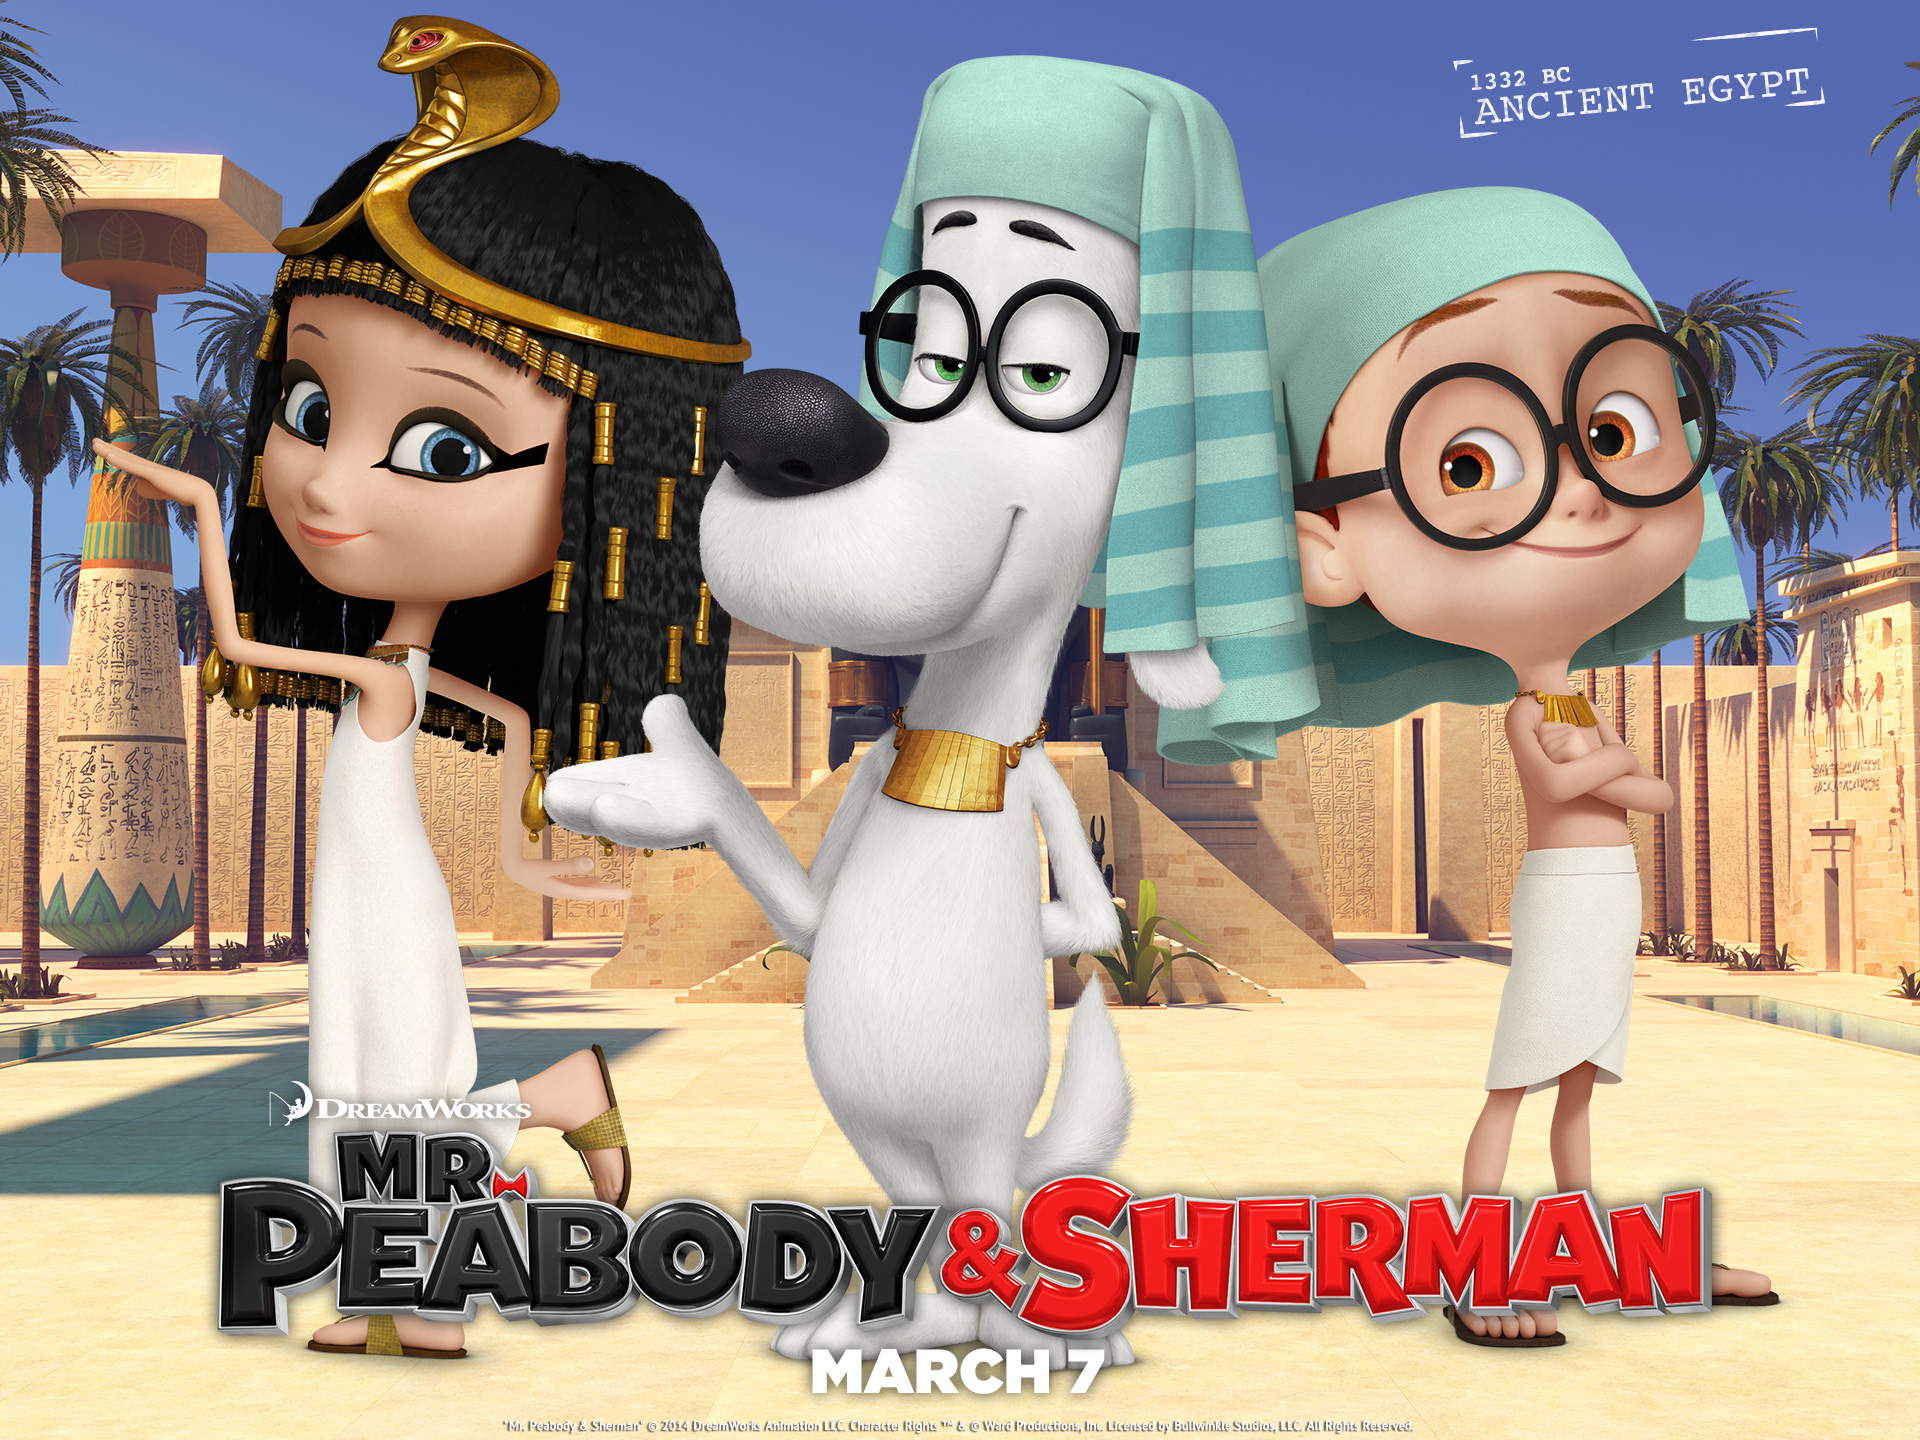 Mr Peabody And Sherman In Ancient Egypt Desktop Wallpaper